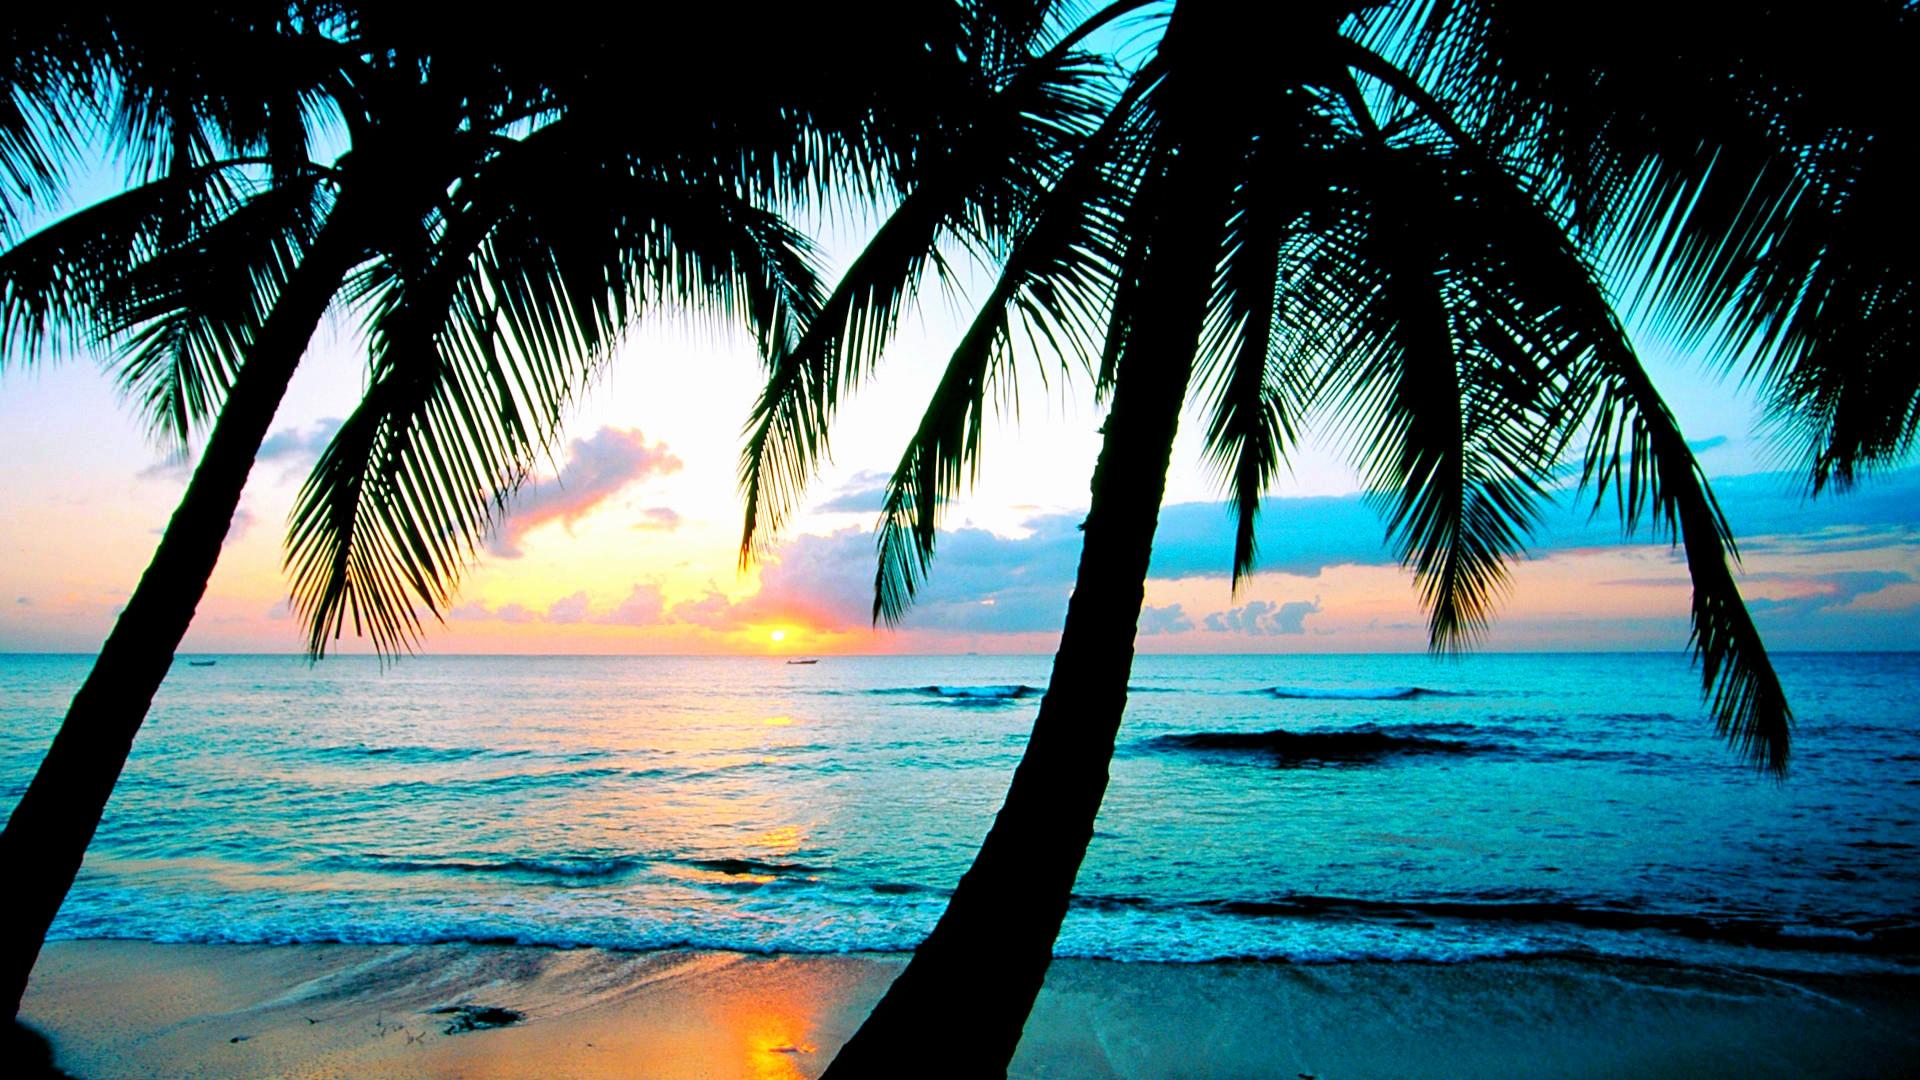 Tropical Beach Wallpaper Desktop background picture